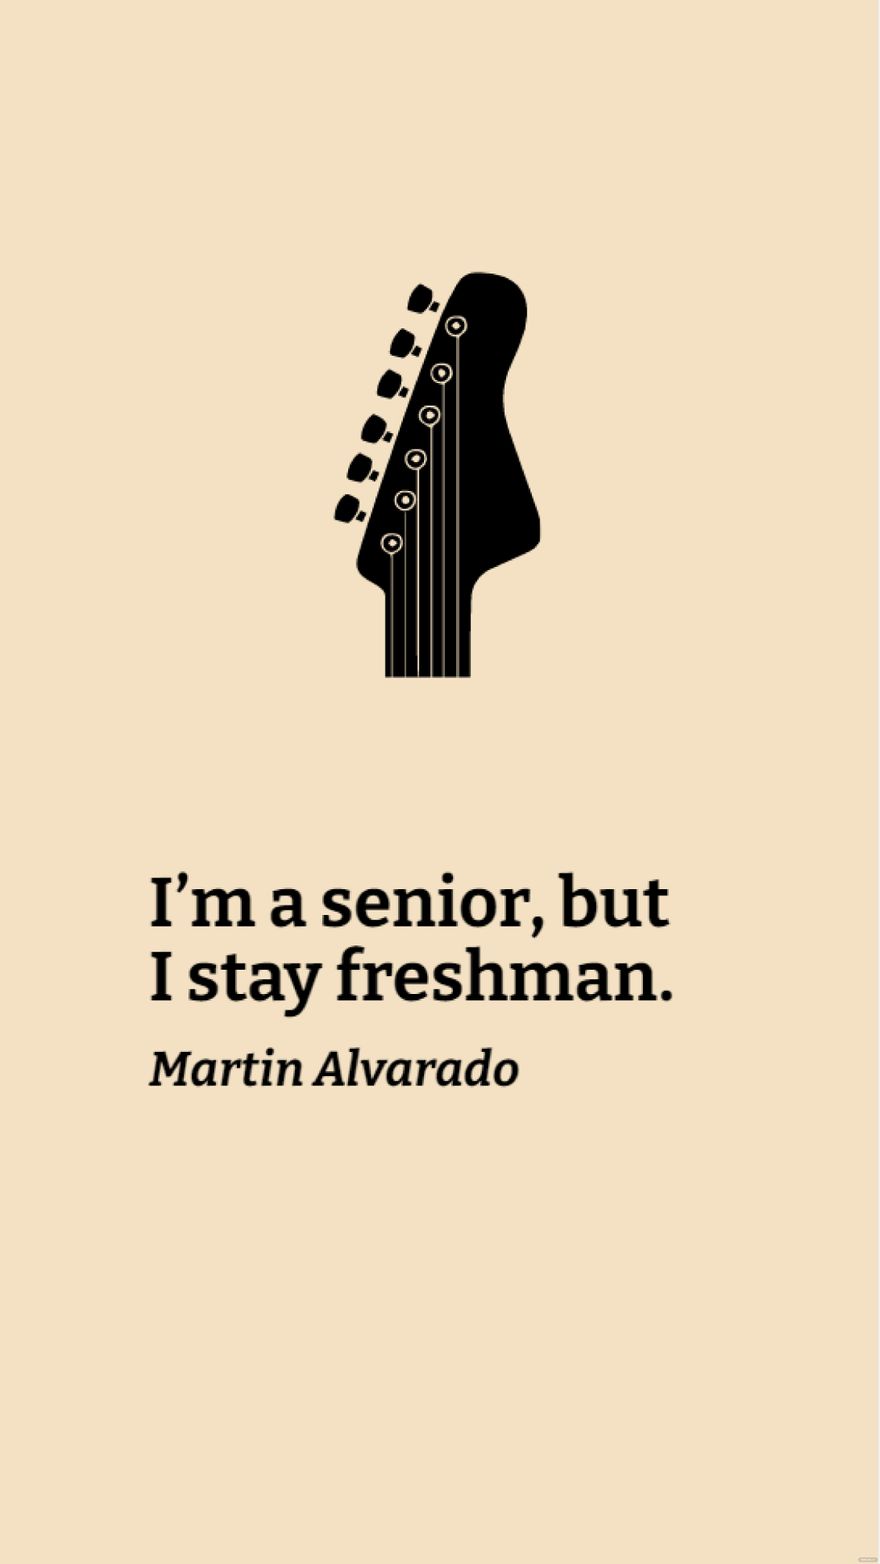 Free Martin Alvarado - I’m a senior, but I stay freshman. in JPG